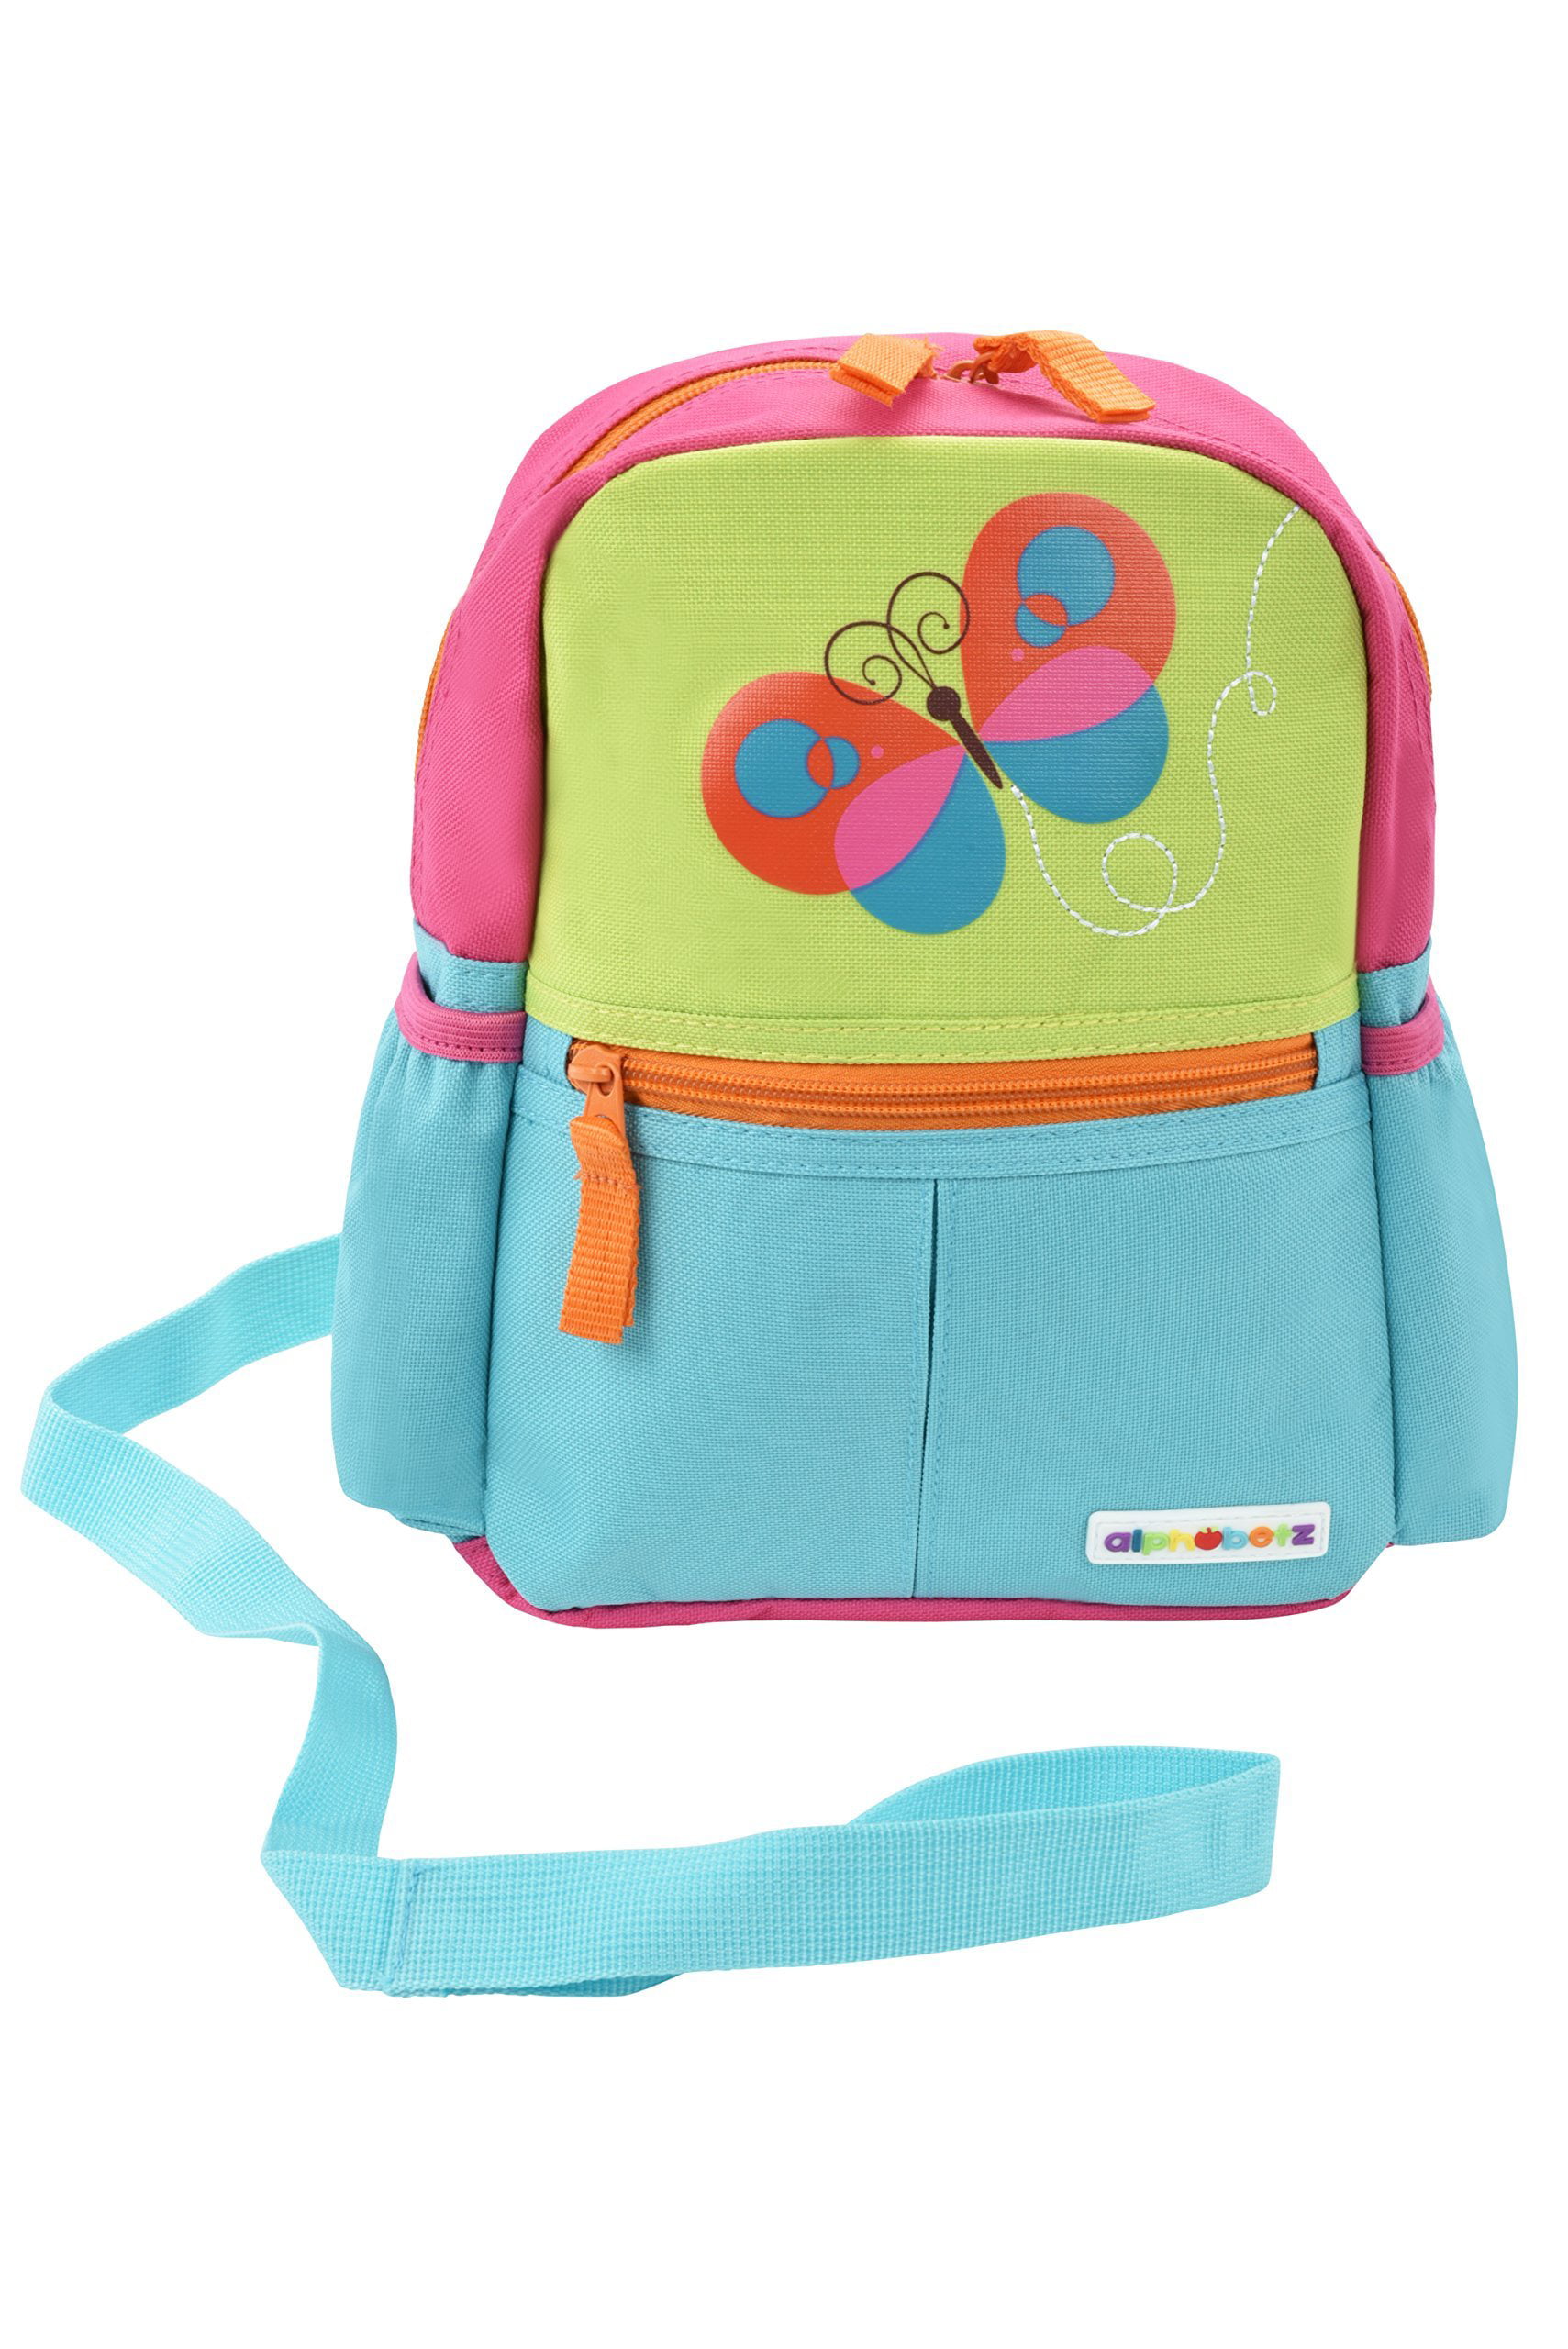 DesignaFriend Shoulder Bag with Stationary not suitable for children under 3yrs 